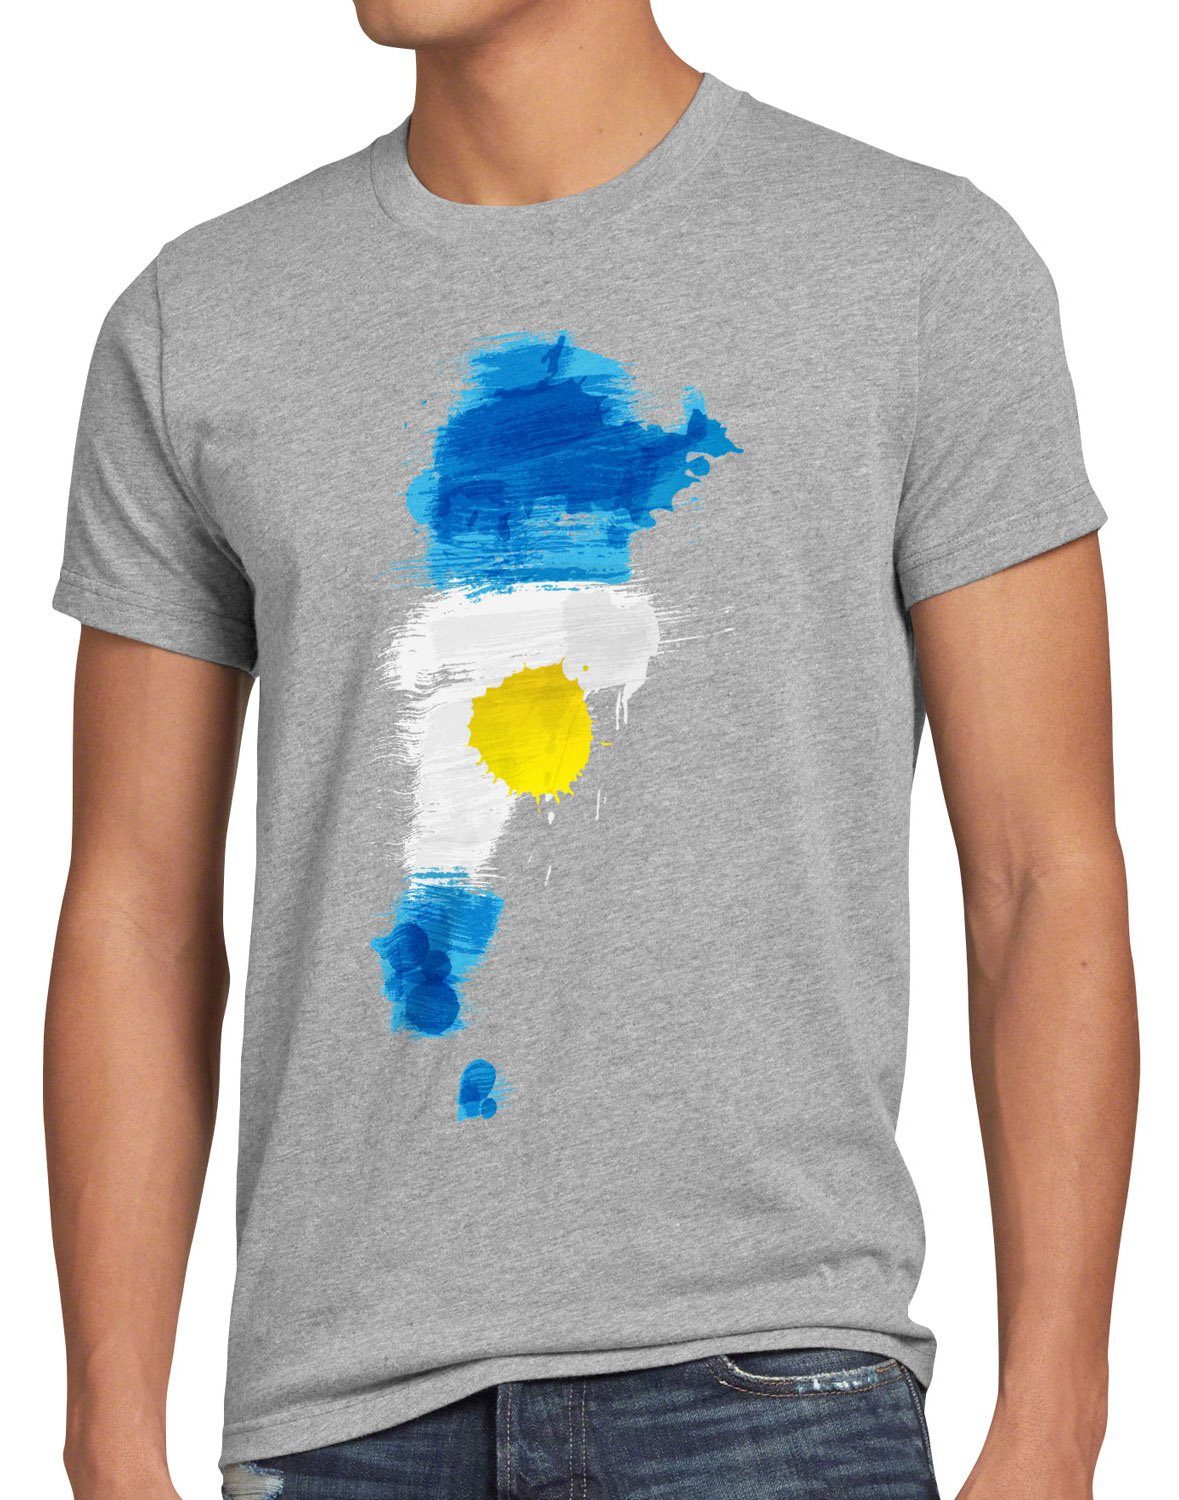 Flagge Argentina Fahne Sport Fußball EM T-Shirt meliert grau Print-Shirt style3 Argentinien WM Herren